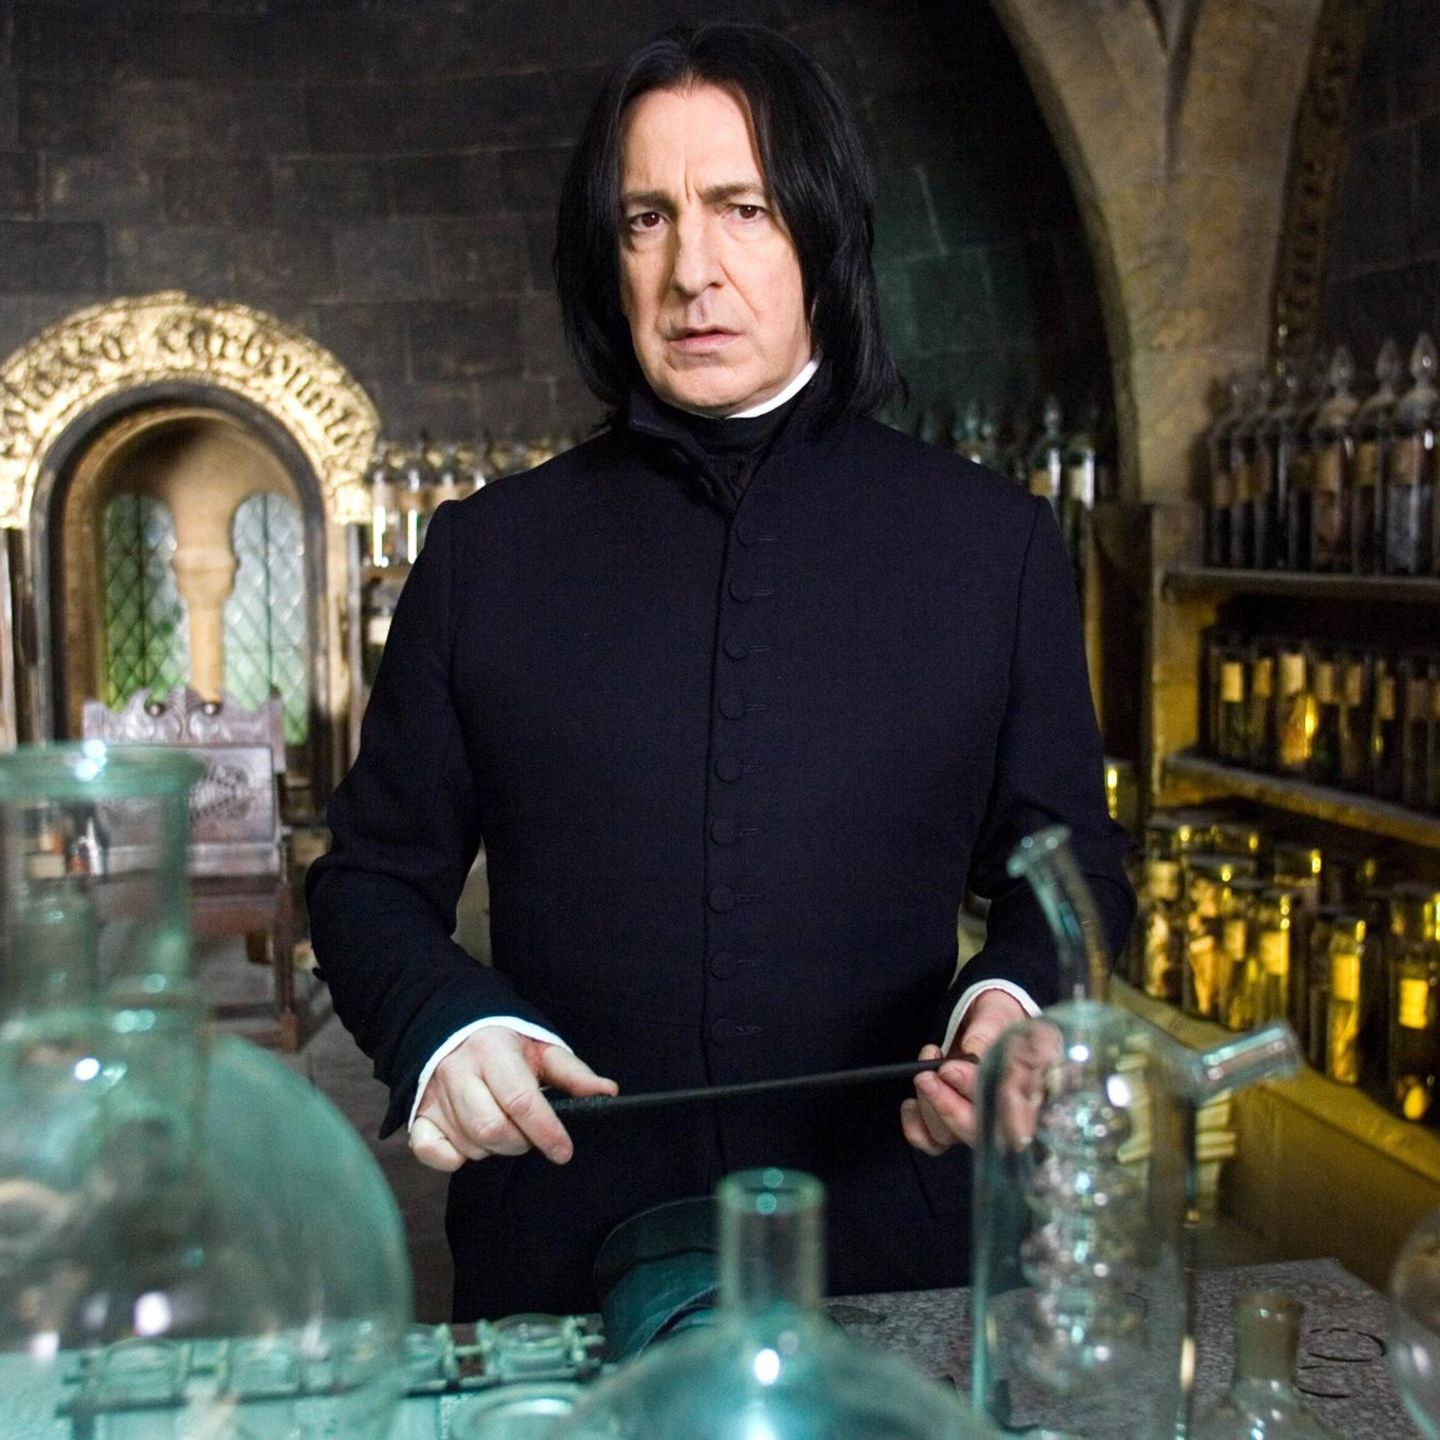 Alan Rickman als Severus Snape in "Harry Potter"